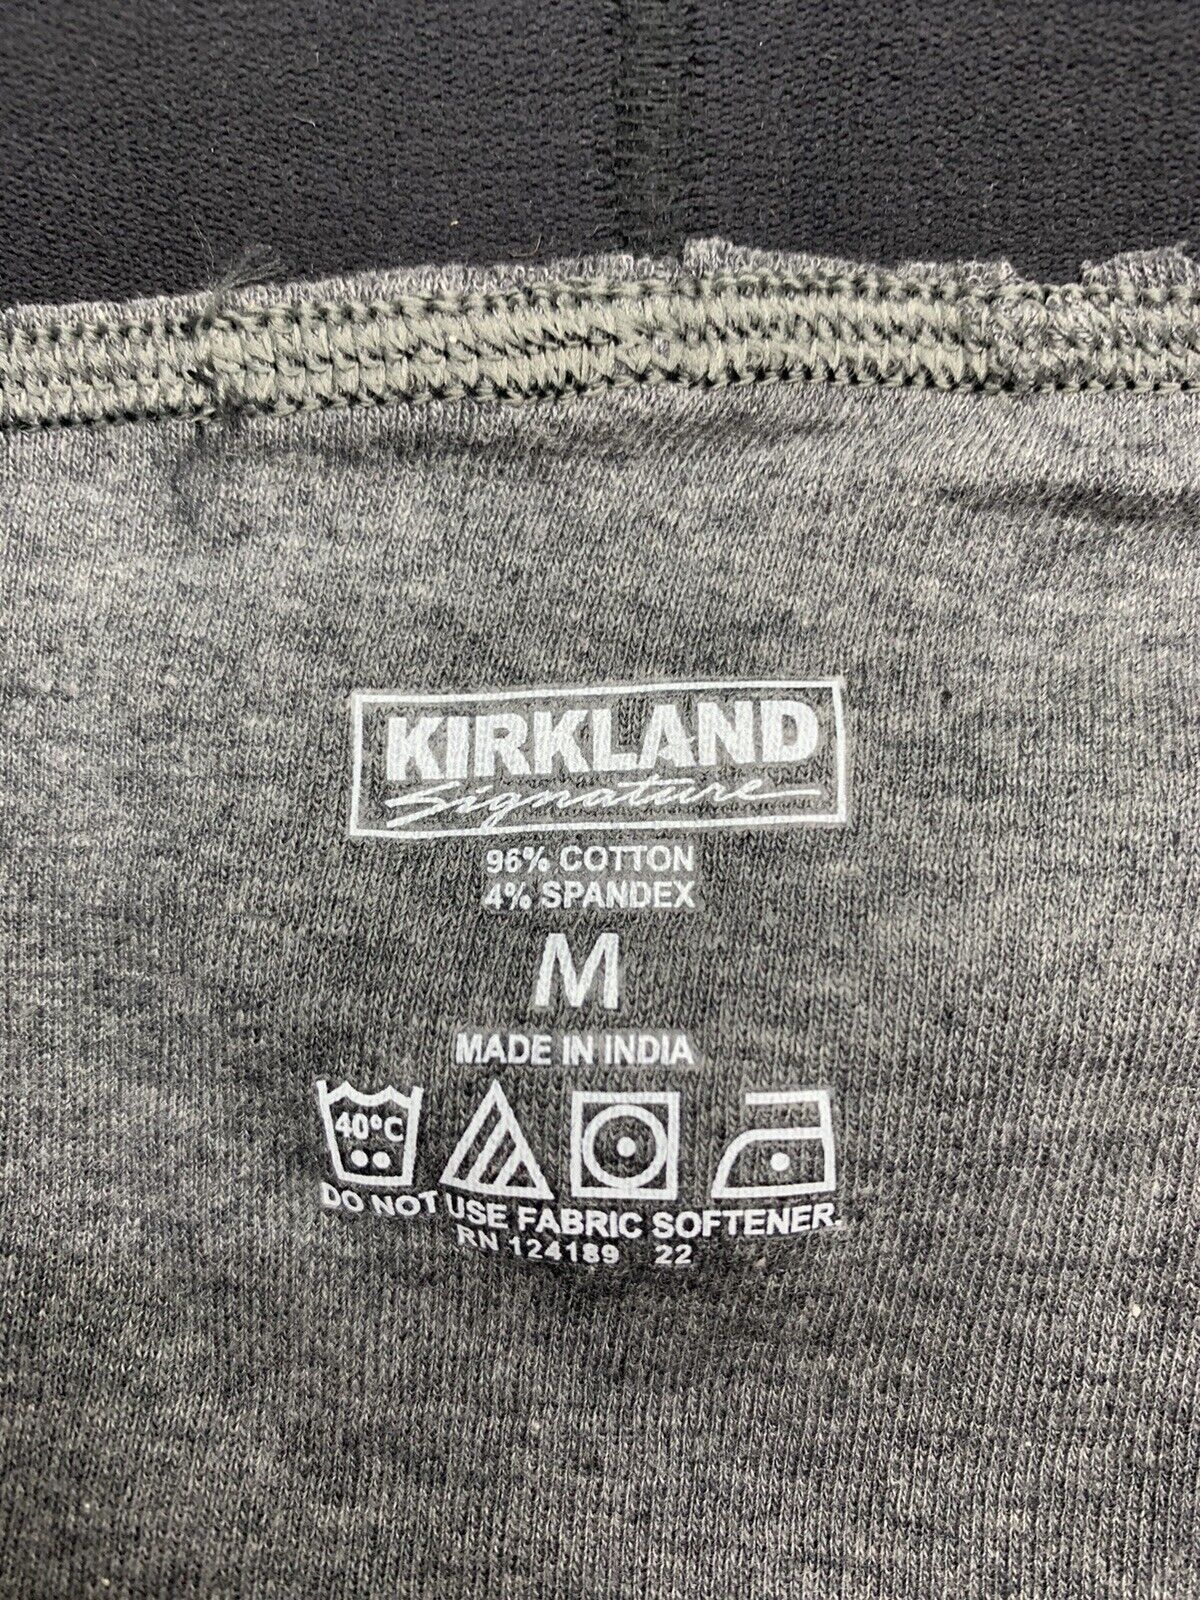 Kirkland Mens 1 Pair Grey Boxer Briefs Size Medium - beyond exchange